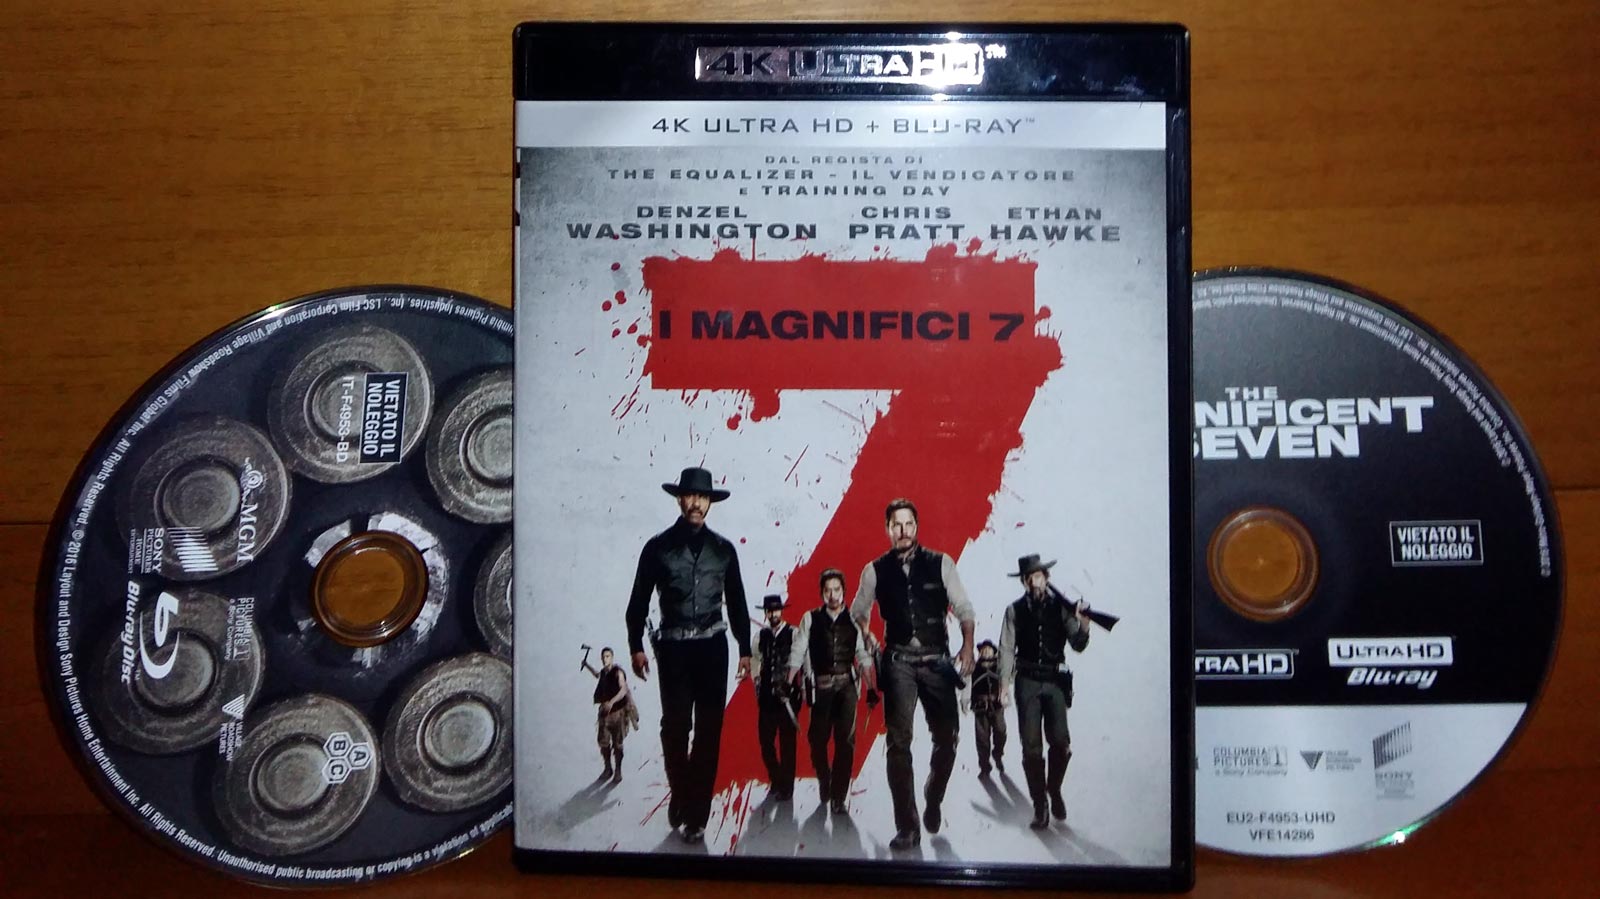 I Magnifici 7, Blu-ray 4k UHD